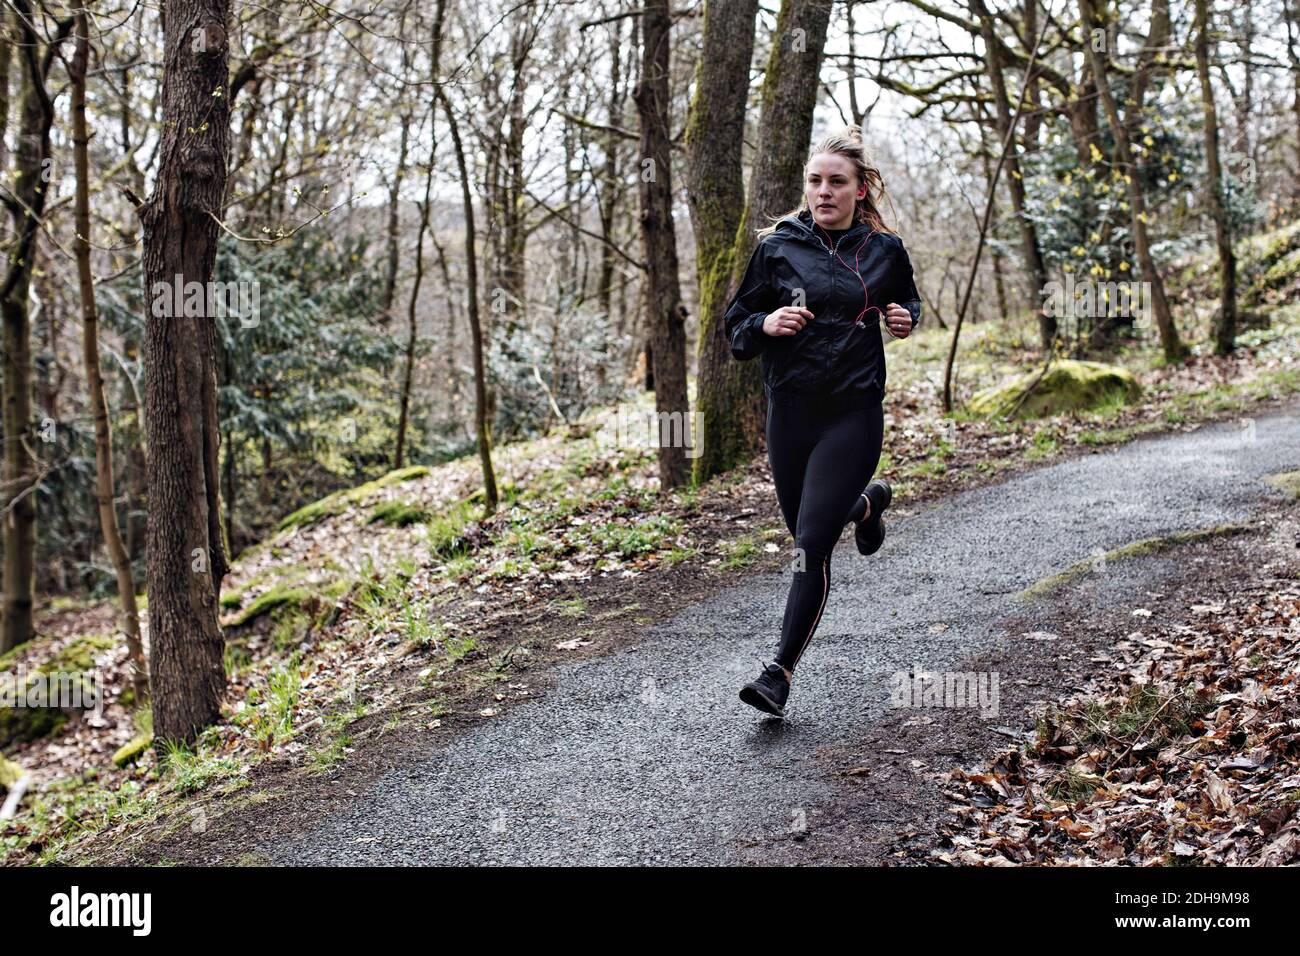 Full length determined female athlete running on narrow road in forest Stock Photo